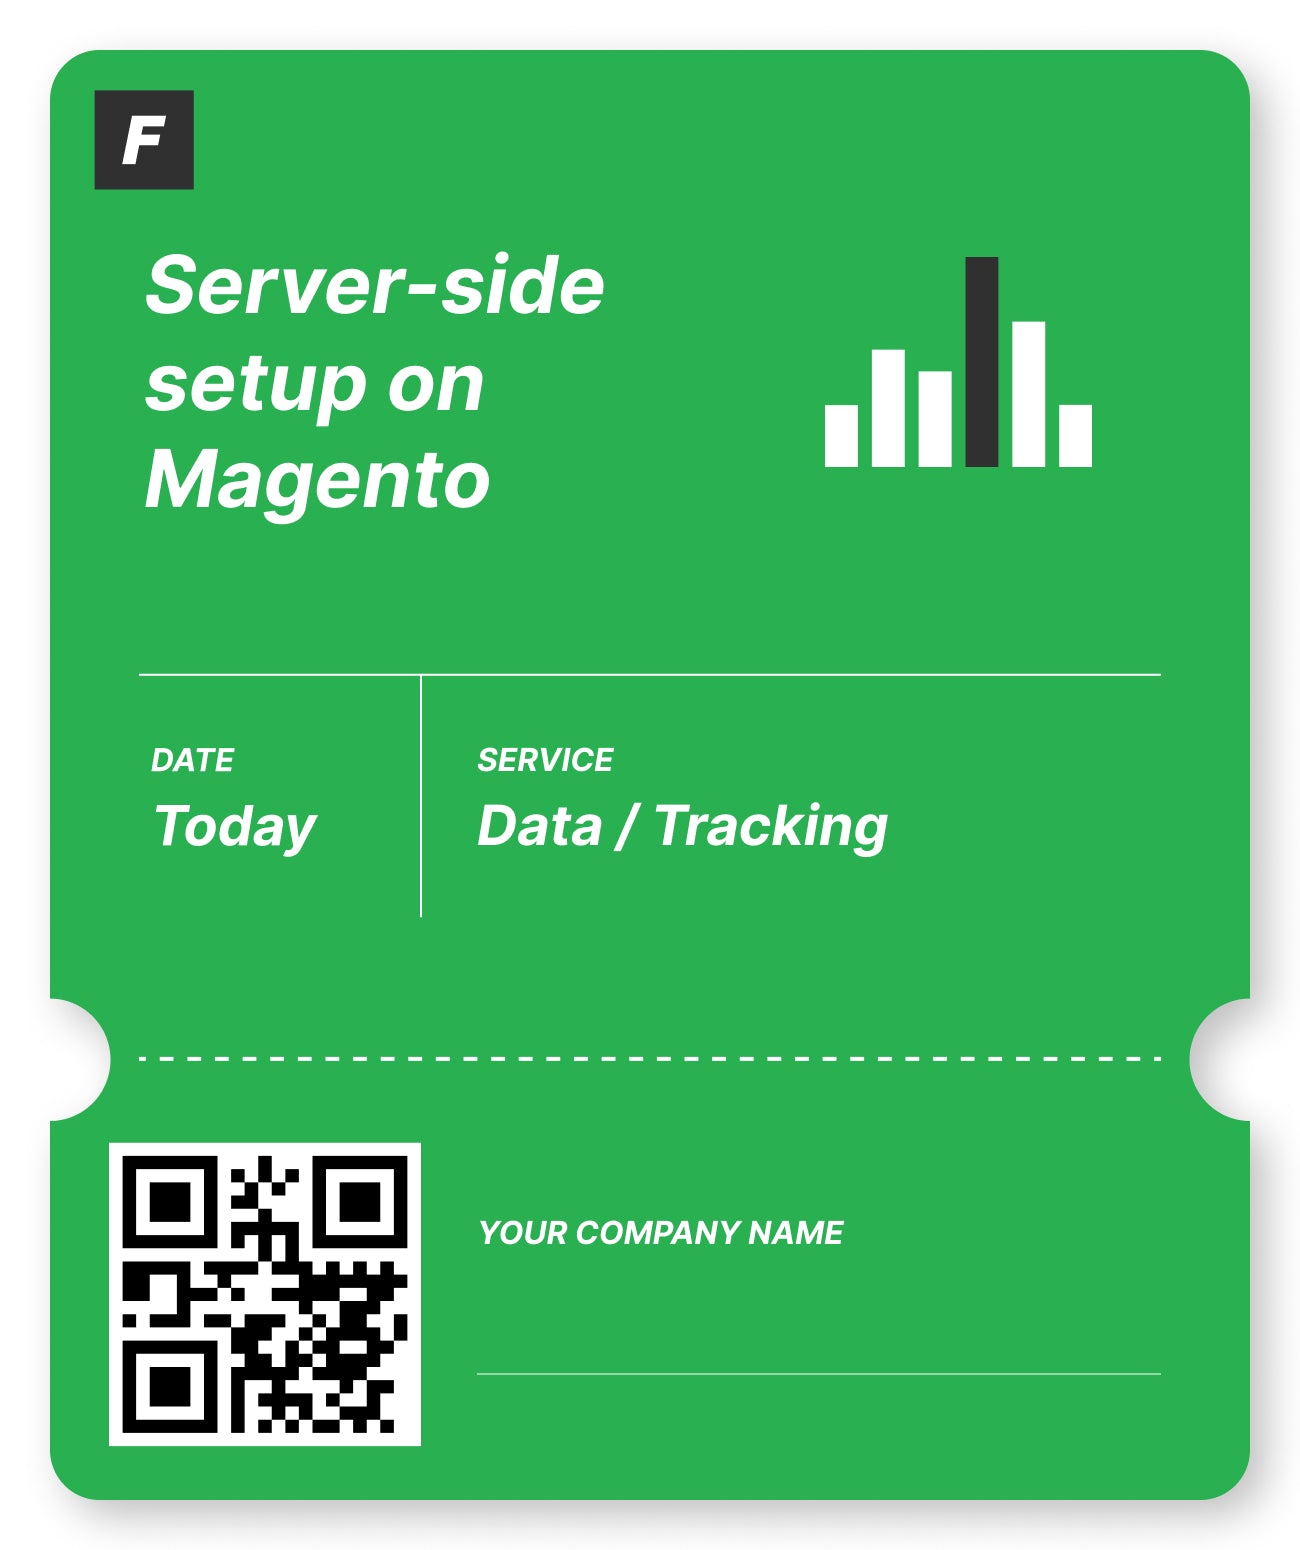 Server-side setup on Magento